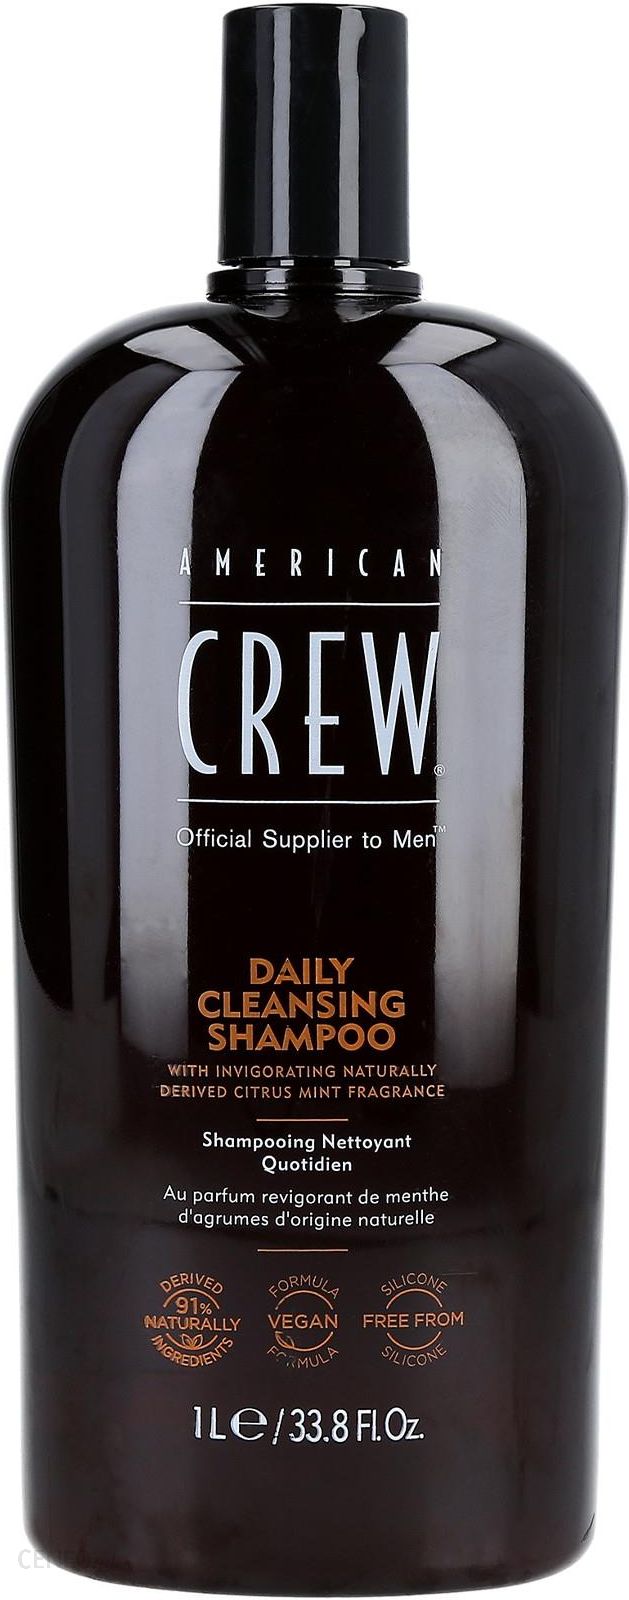 american crew szampon kraków